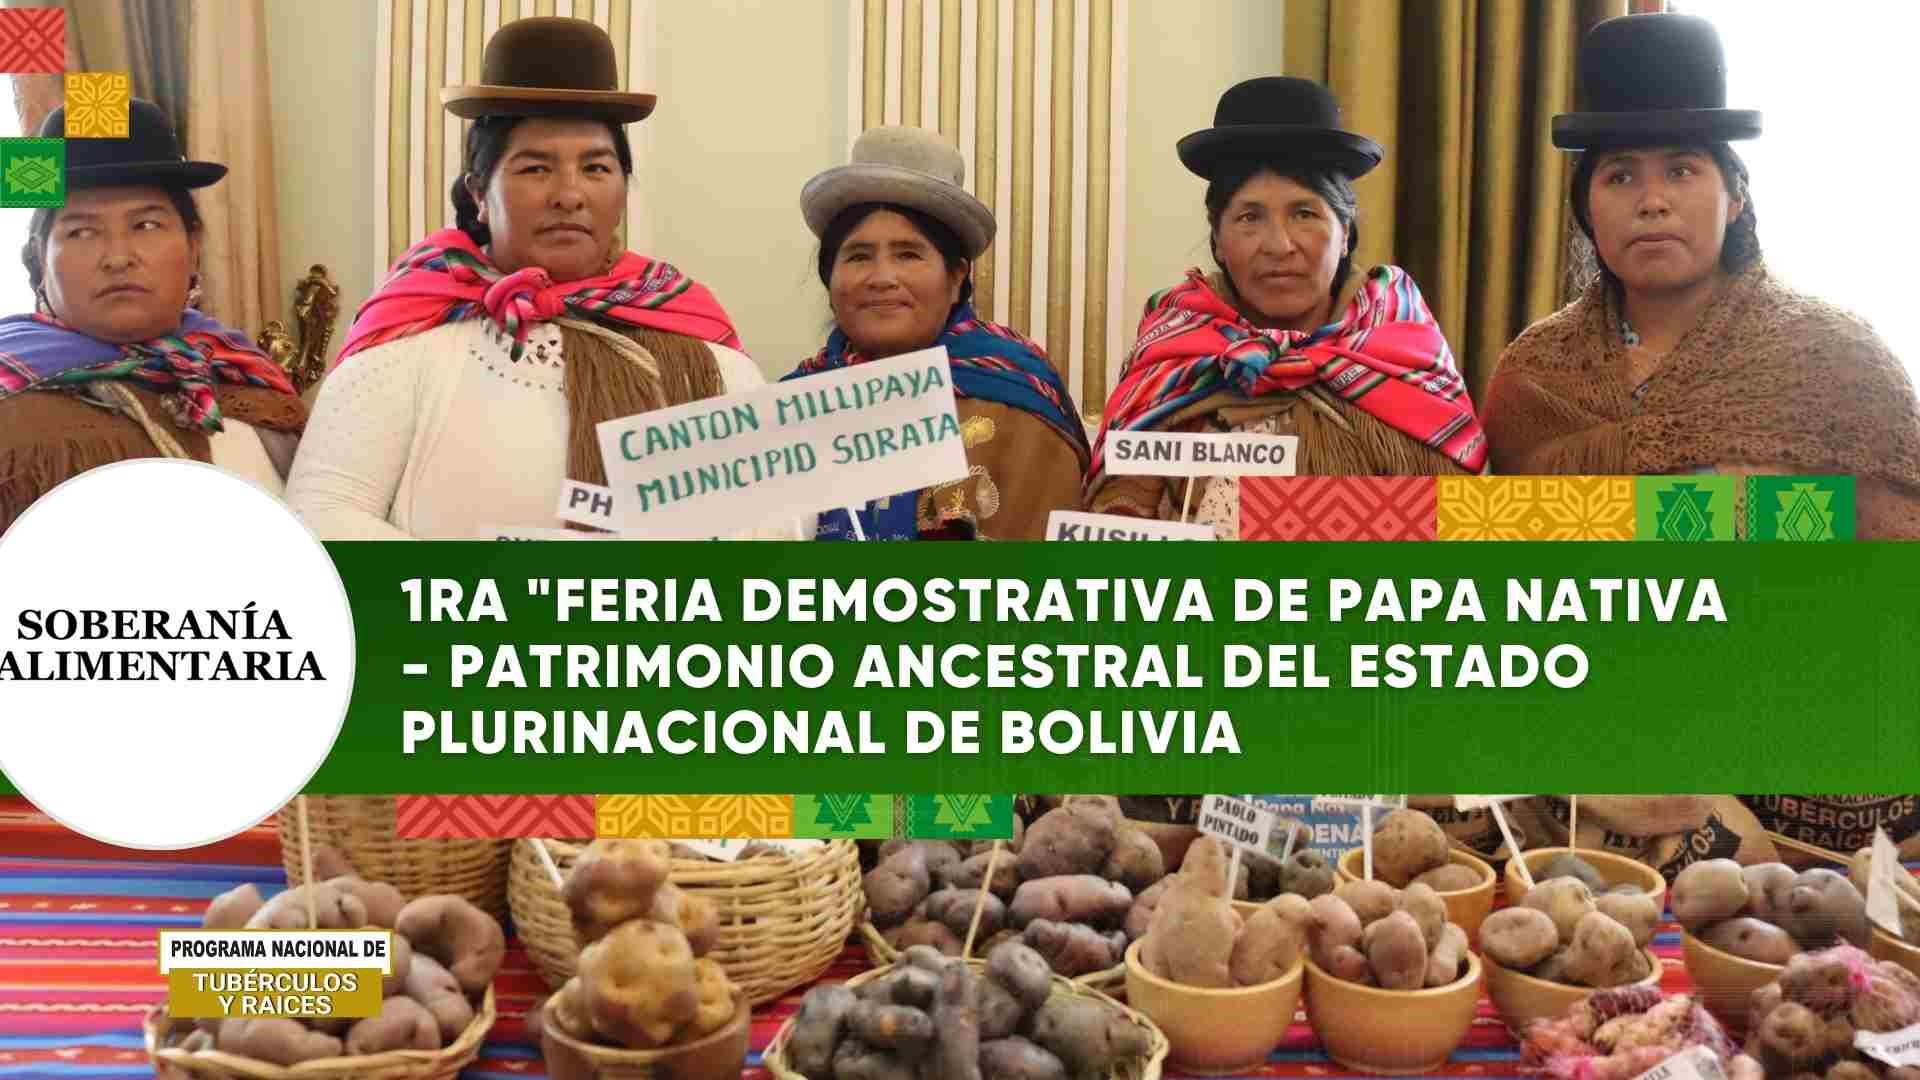 1ra "FERIA DEMOSTRATIVA DE PAPA NATIVA - PATRIMONIO ANCESTRAL DEL ESTADO PLURINACIONAL DE BOLIVIA